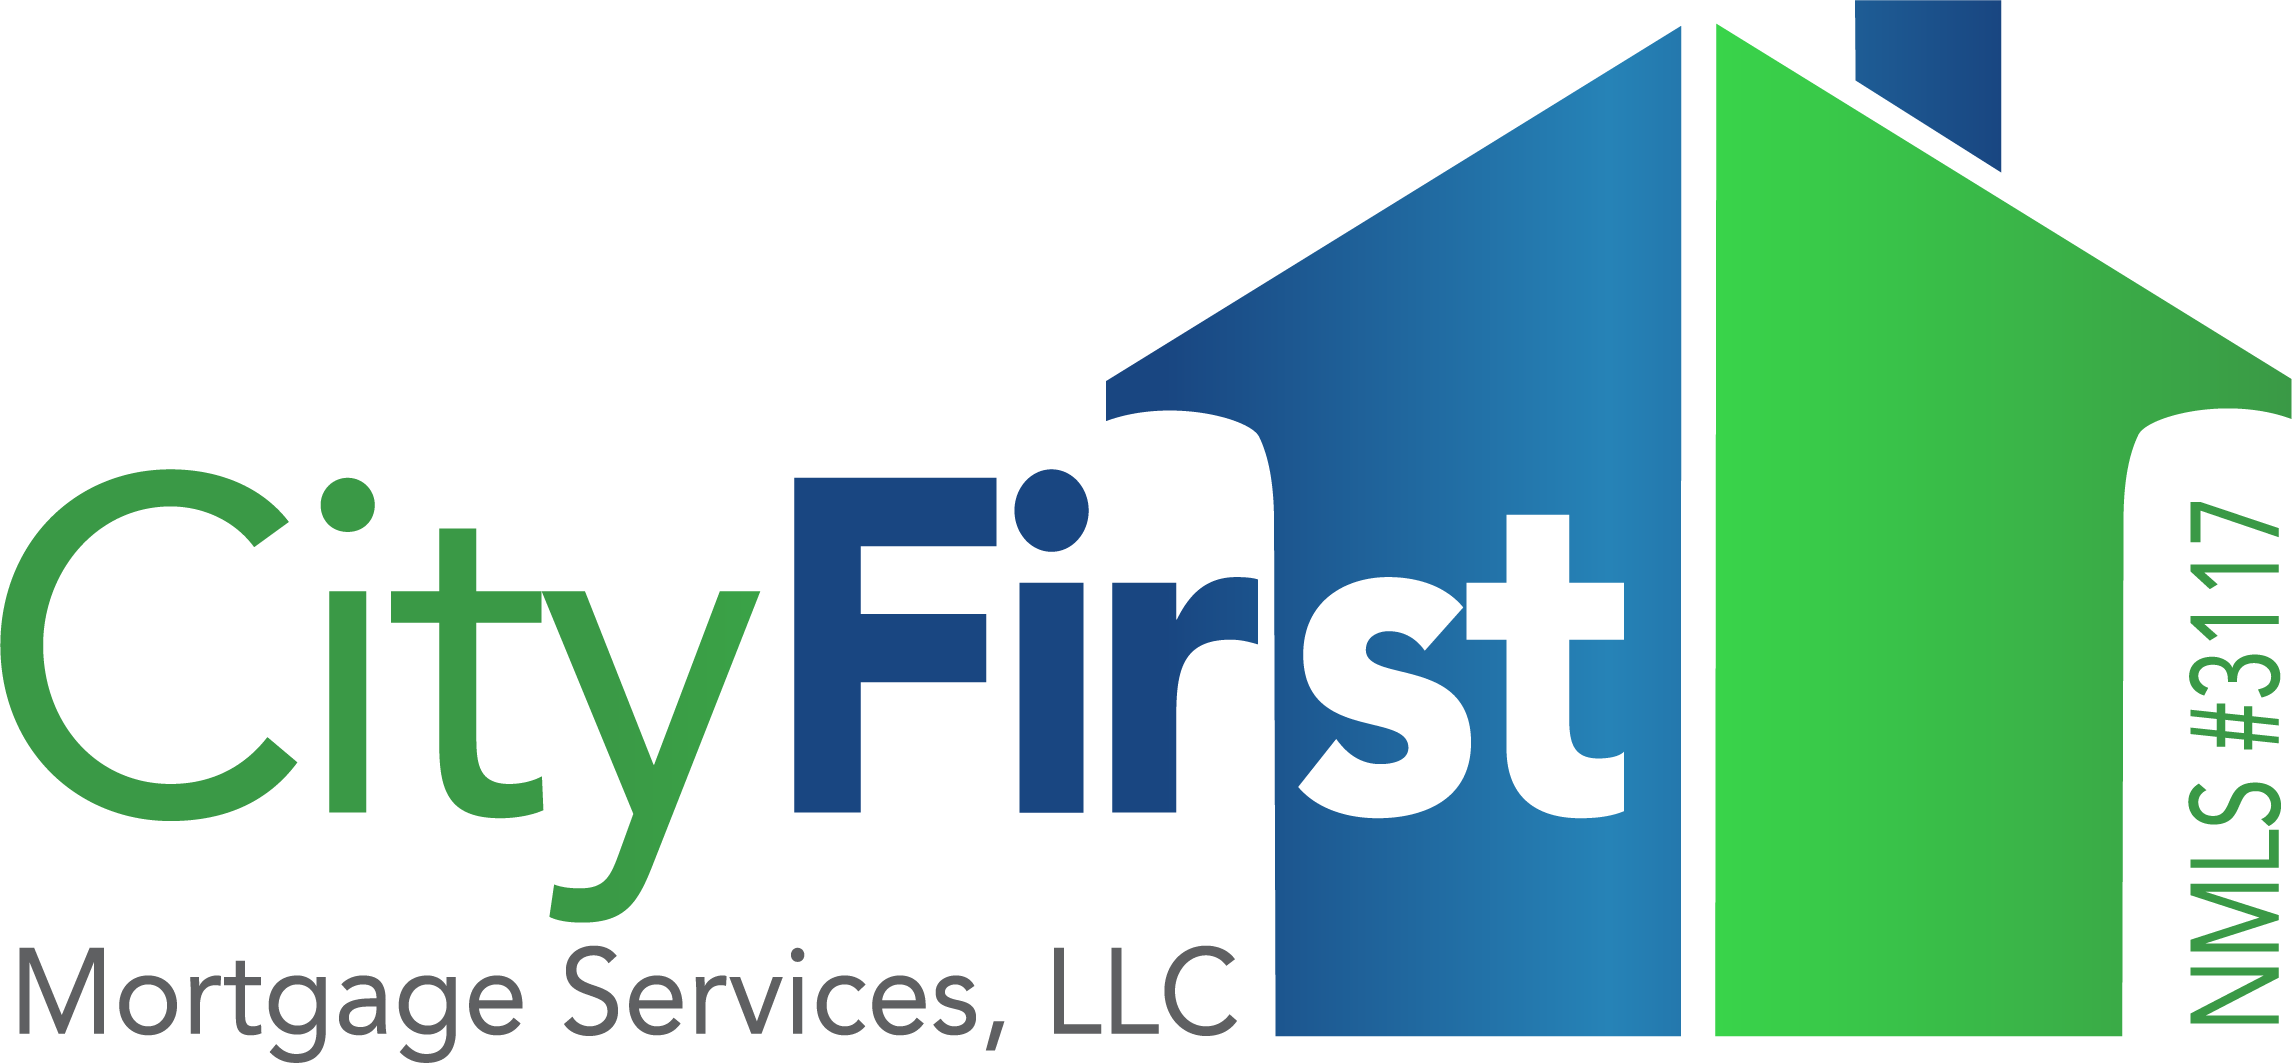 City First Logo